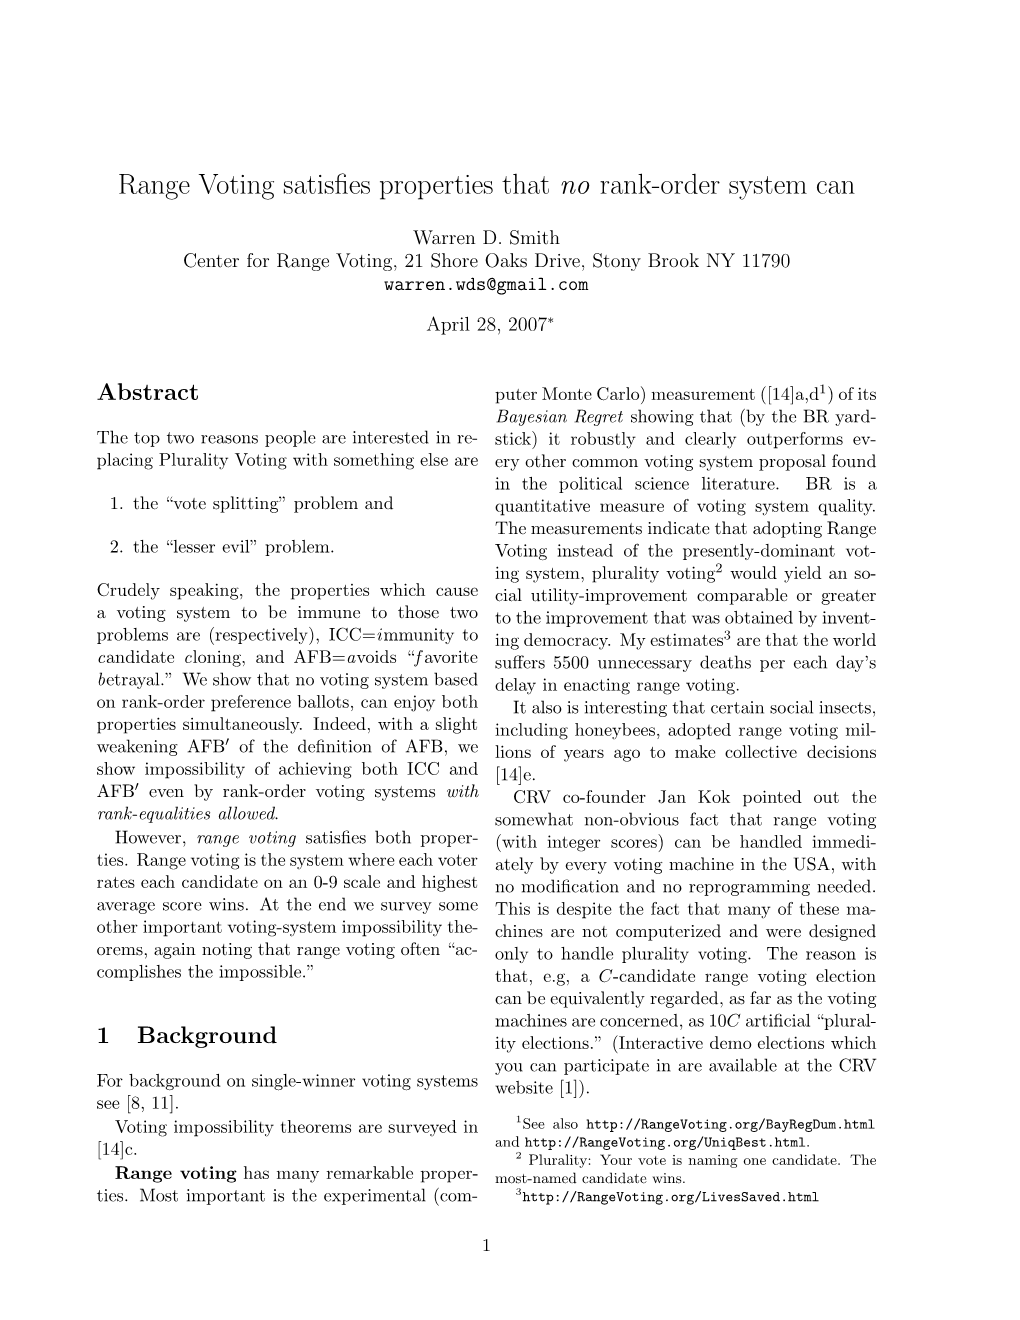 Range Voting Satisfies Properties That No Rank-Order System